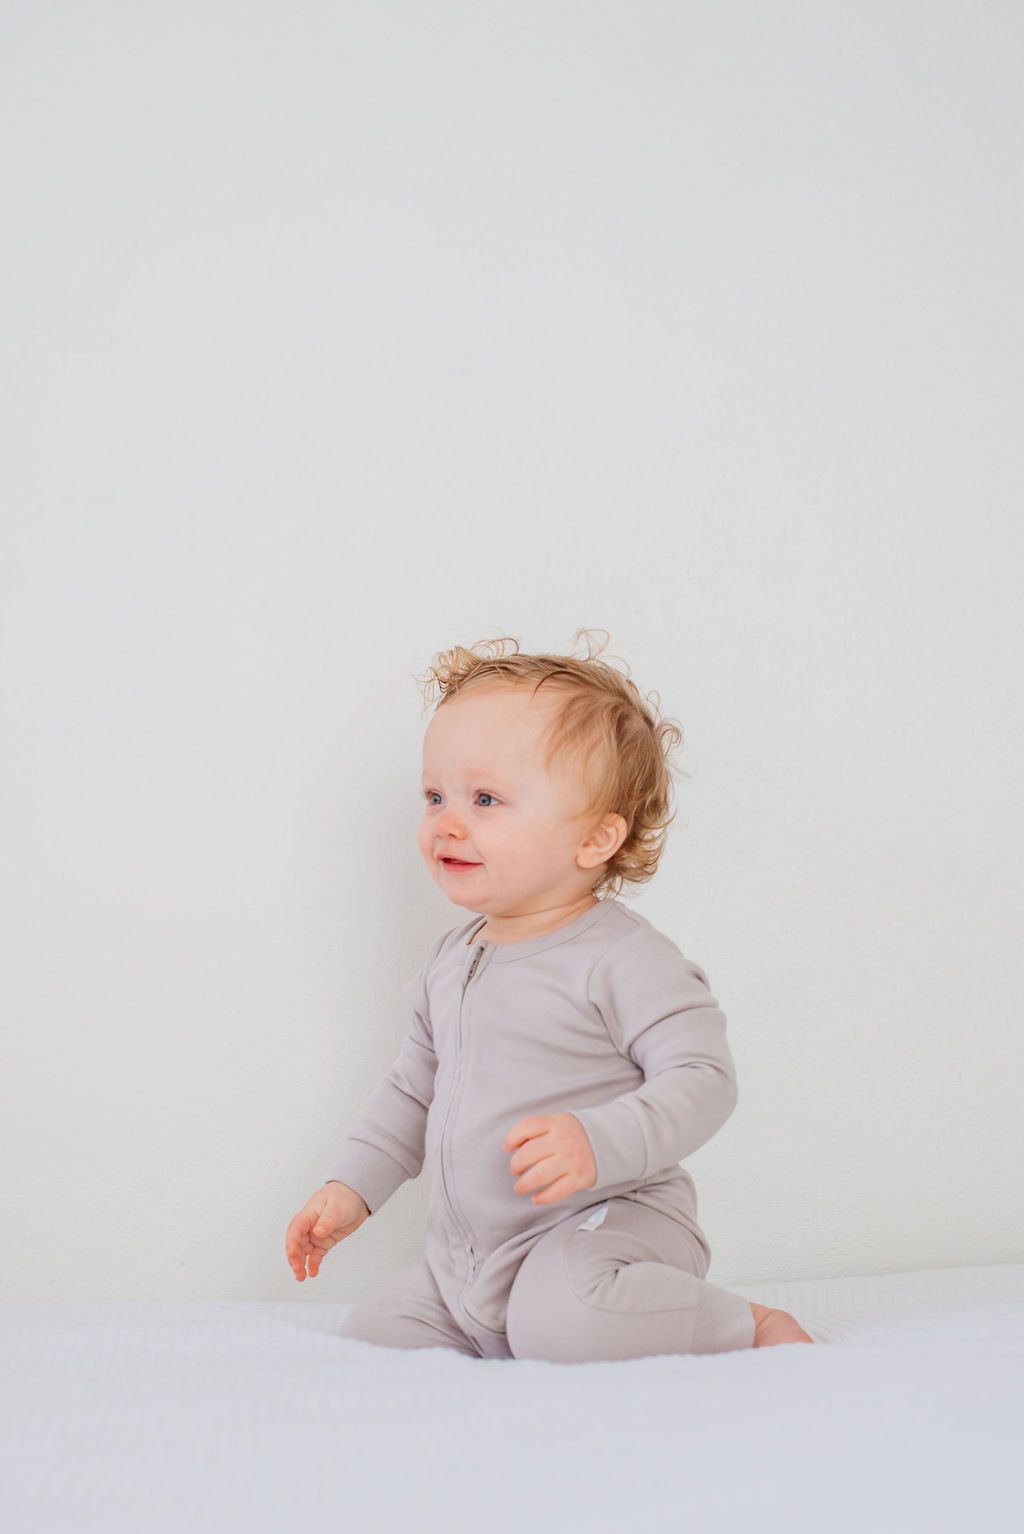 Organic Baby Unisex Romper/Jumpsuit-Plain Grey